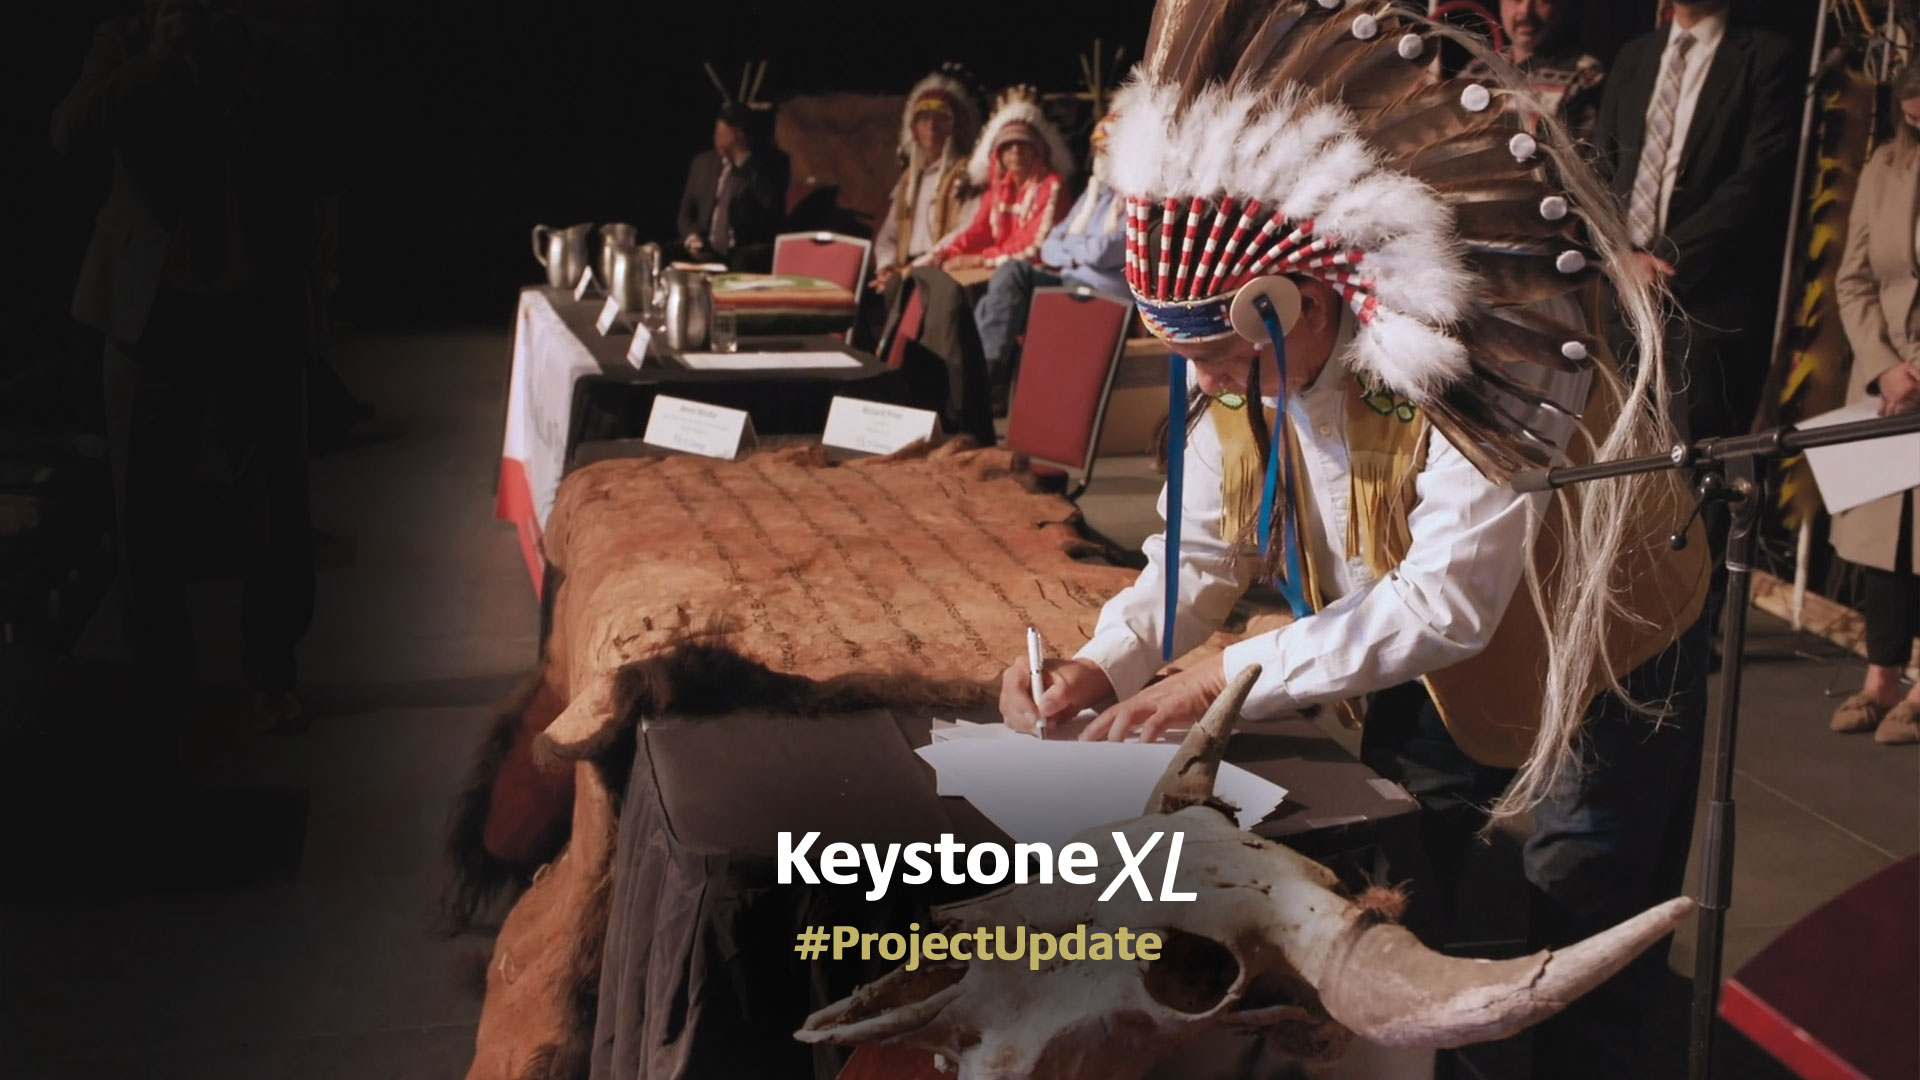 Keystone XL - Project Update - Natural Law Energy - Memorandum of Understanding - Signing